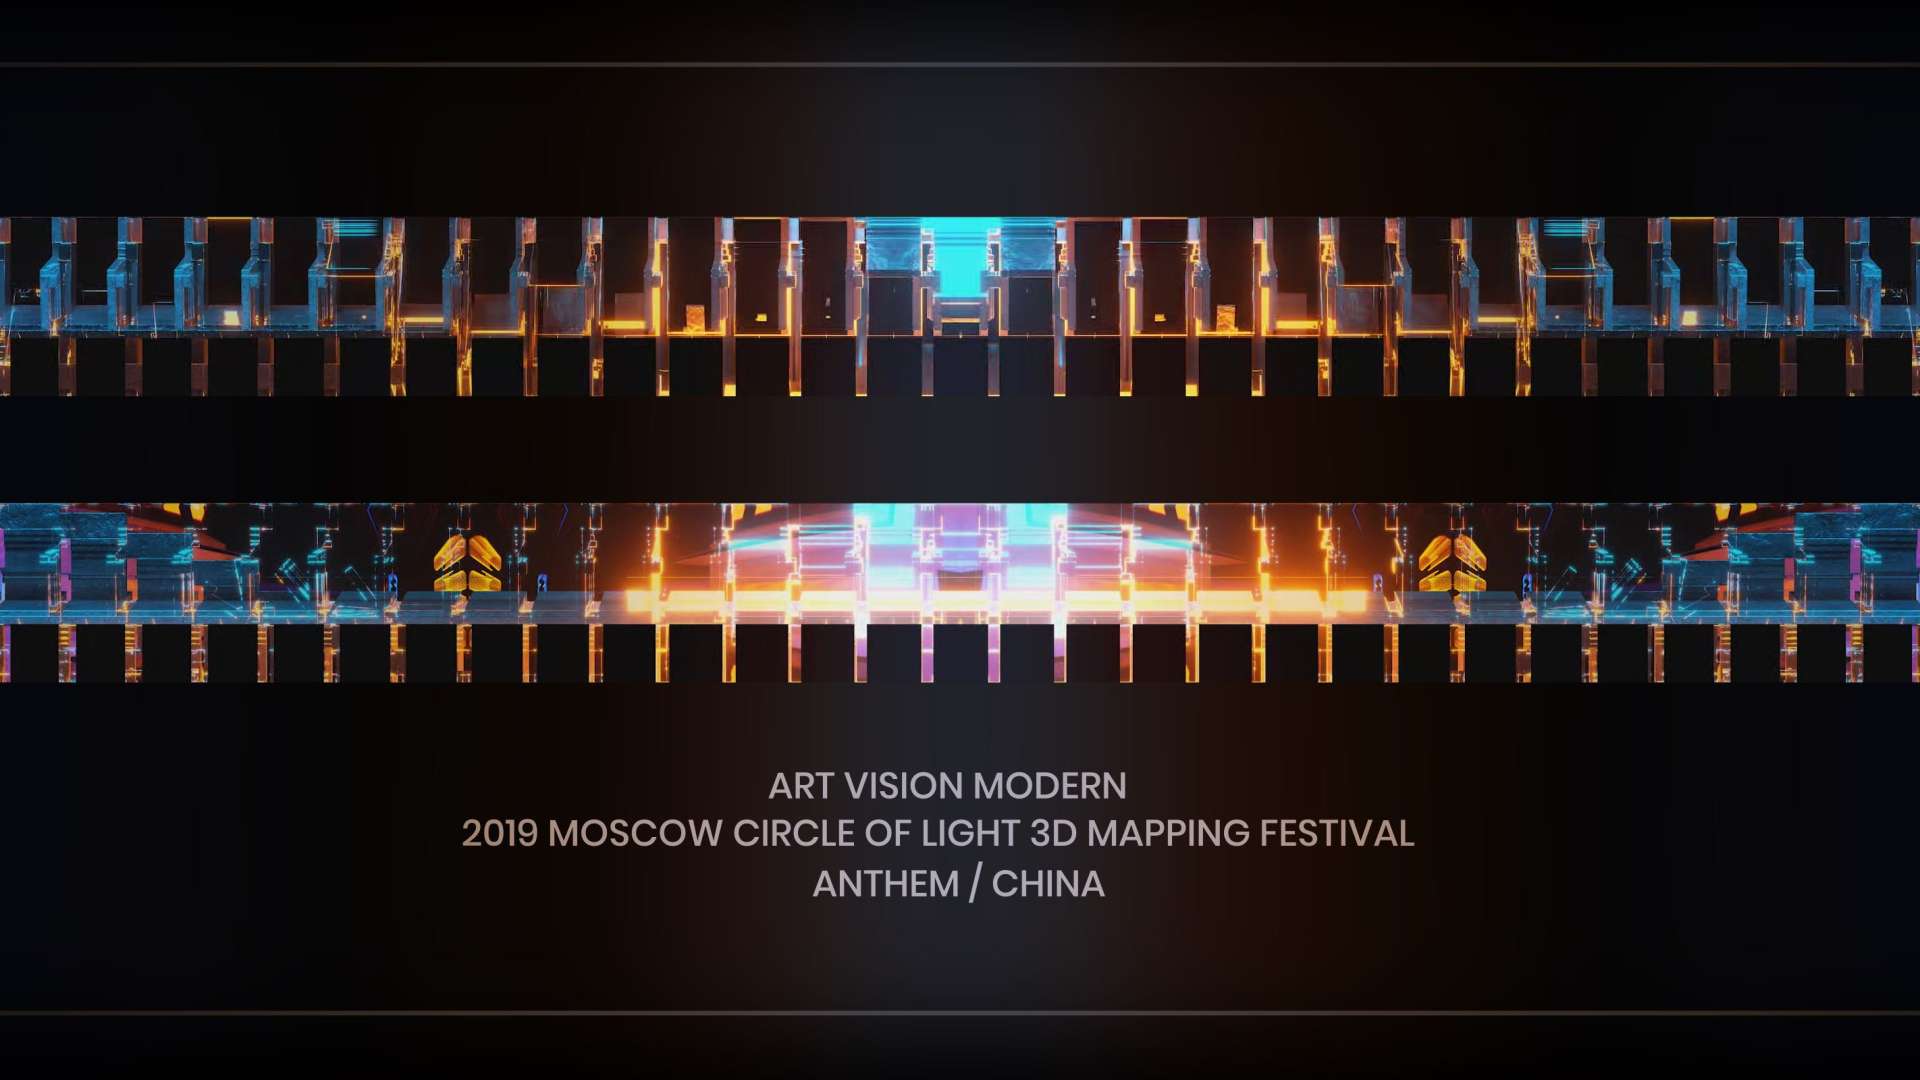 「DROP」- 2019年莫斯科光之环国际灯光节楼体投影动画 入选作品